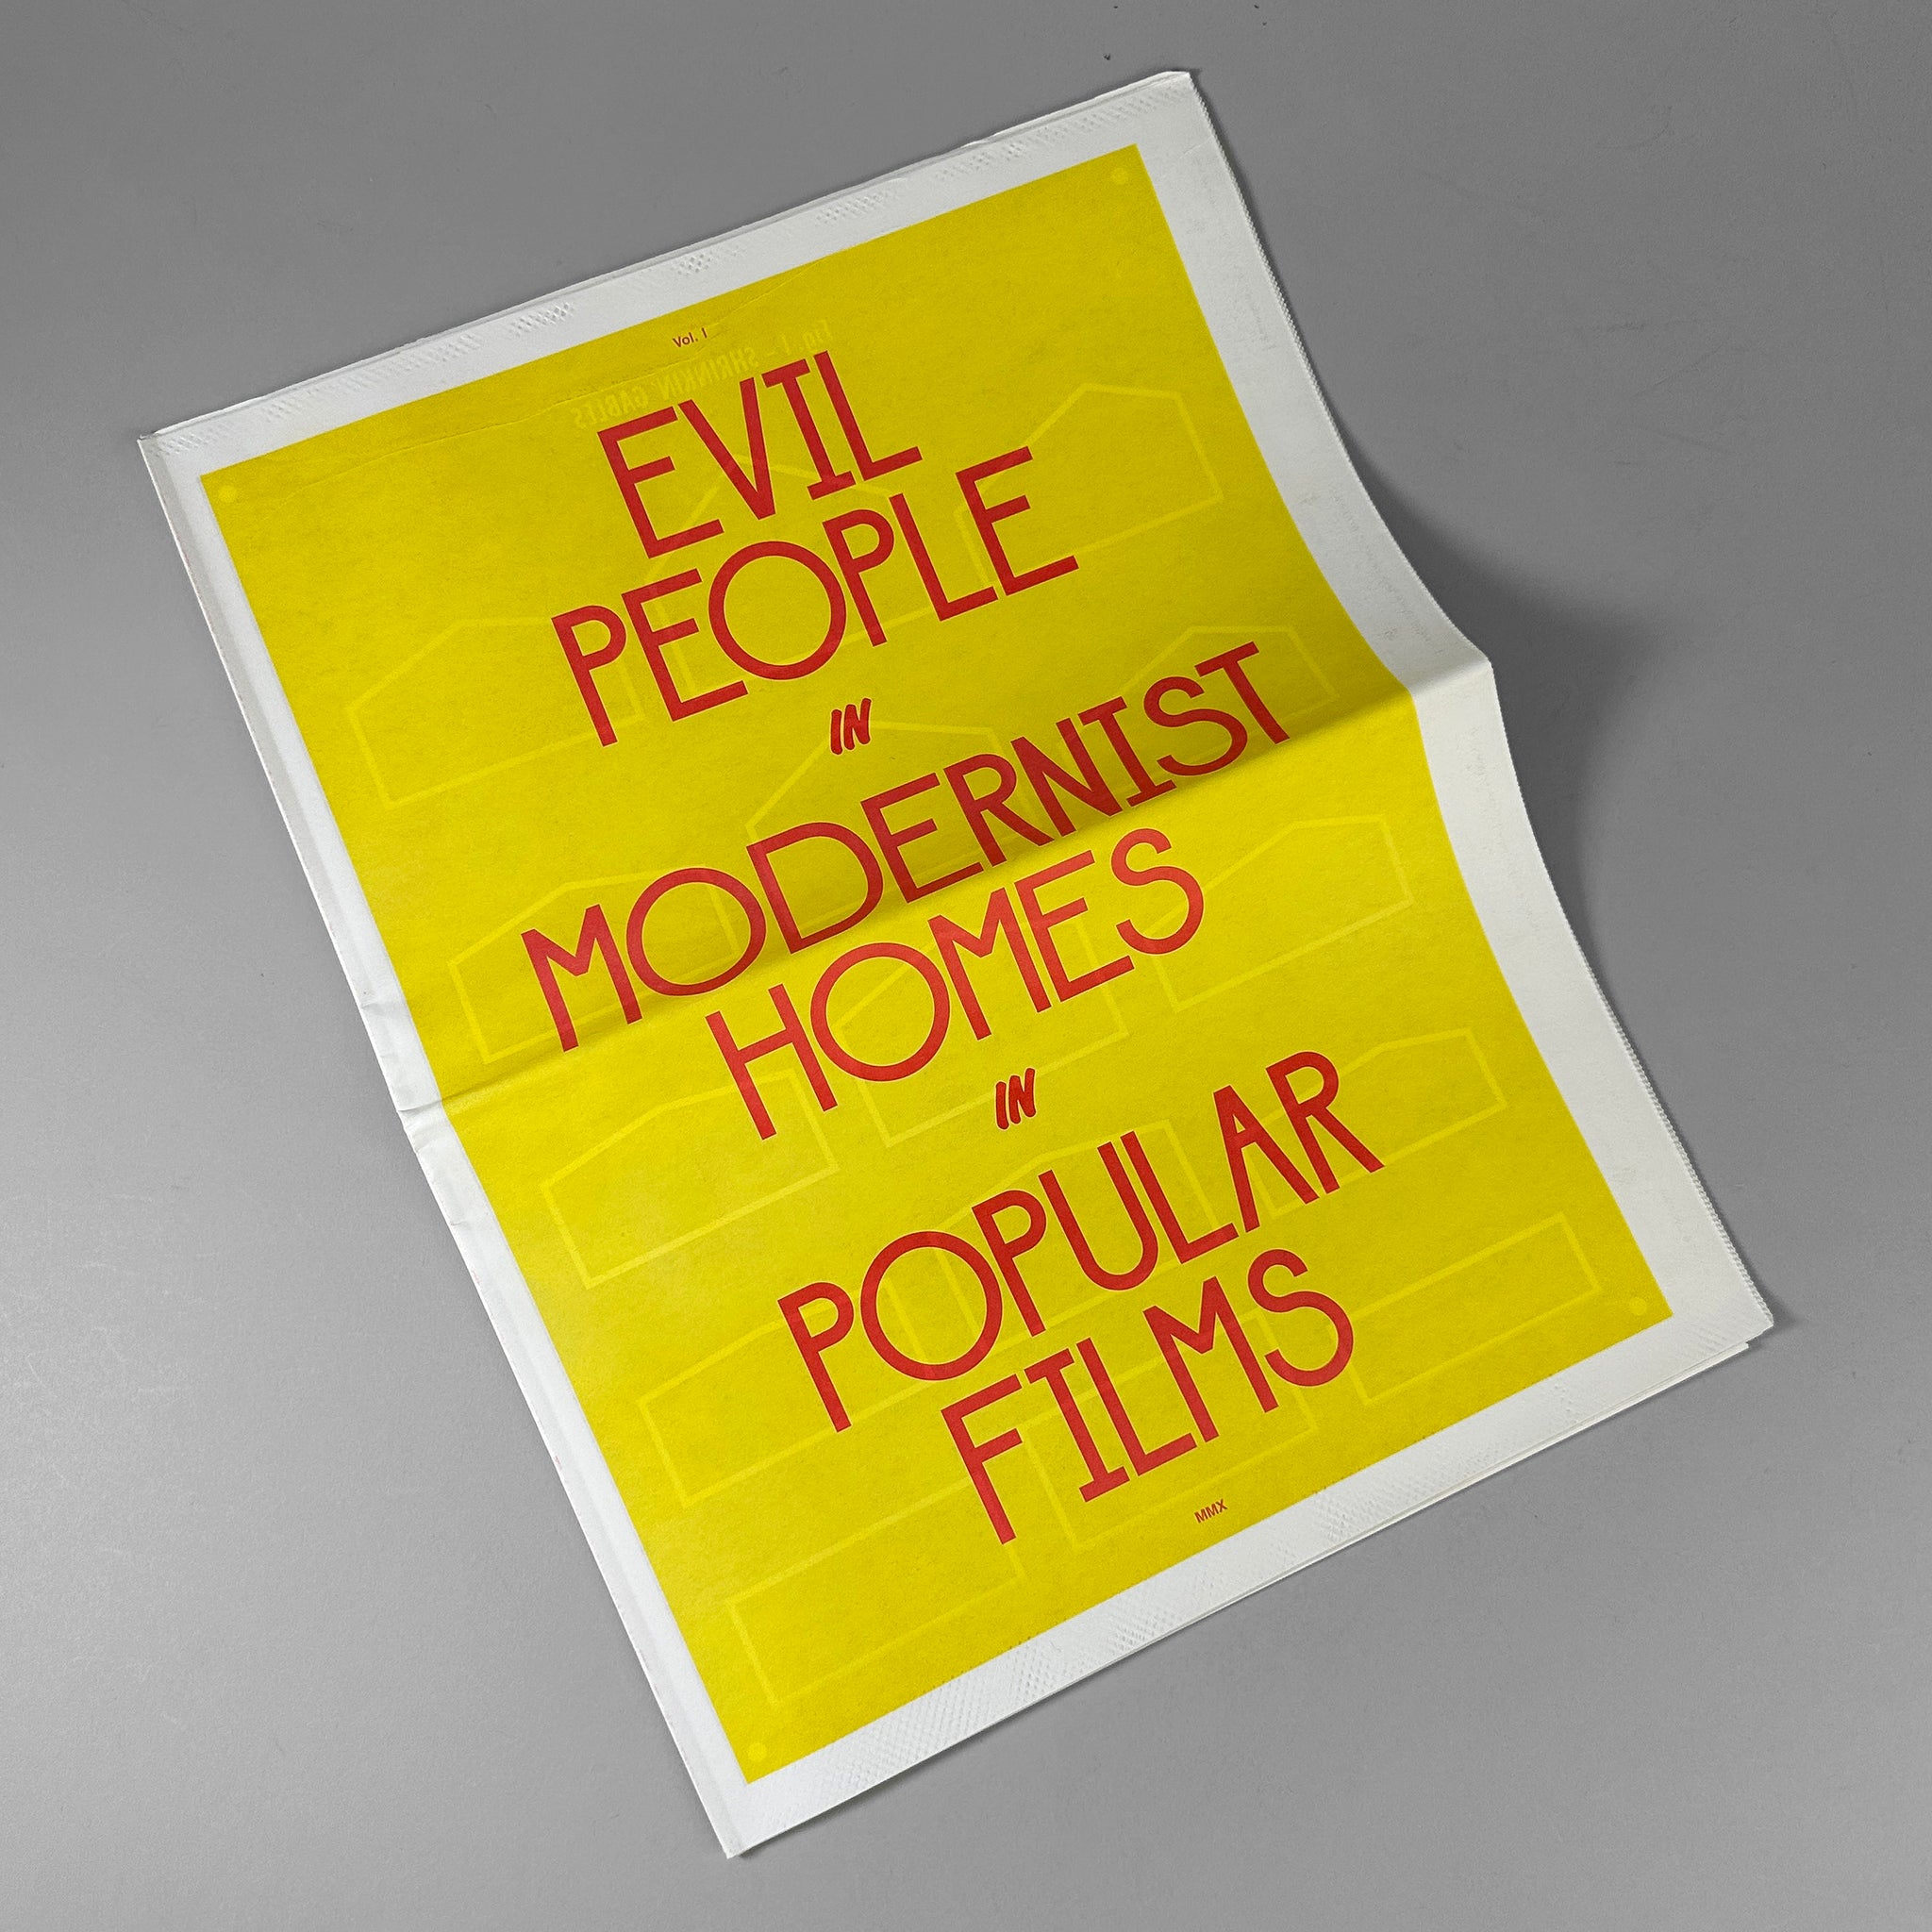 (MISPRINT EDITION) Evil People in Modernist Homes in Popular Films